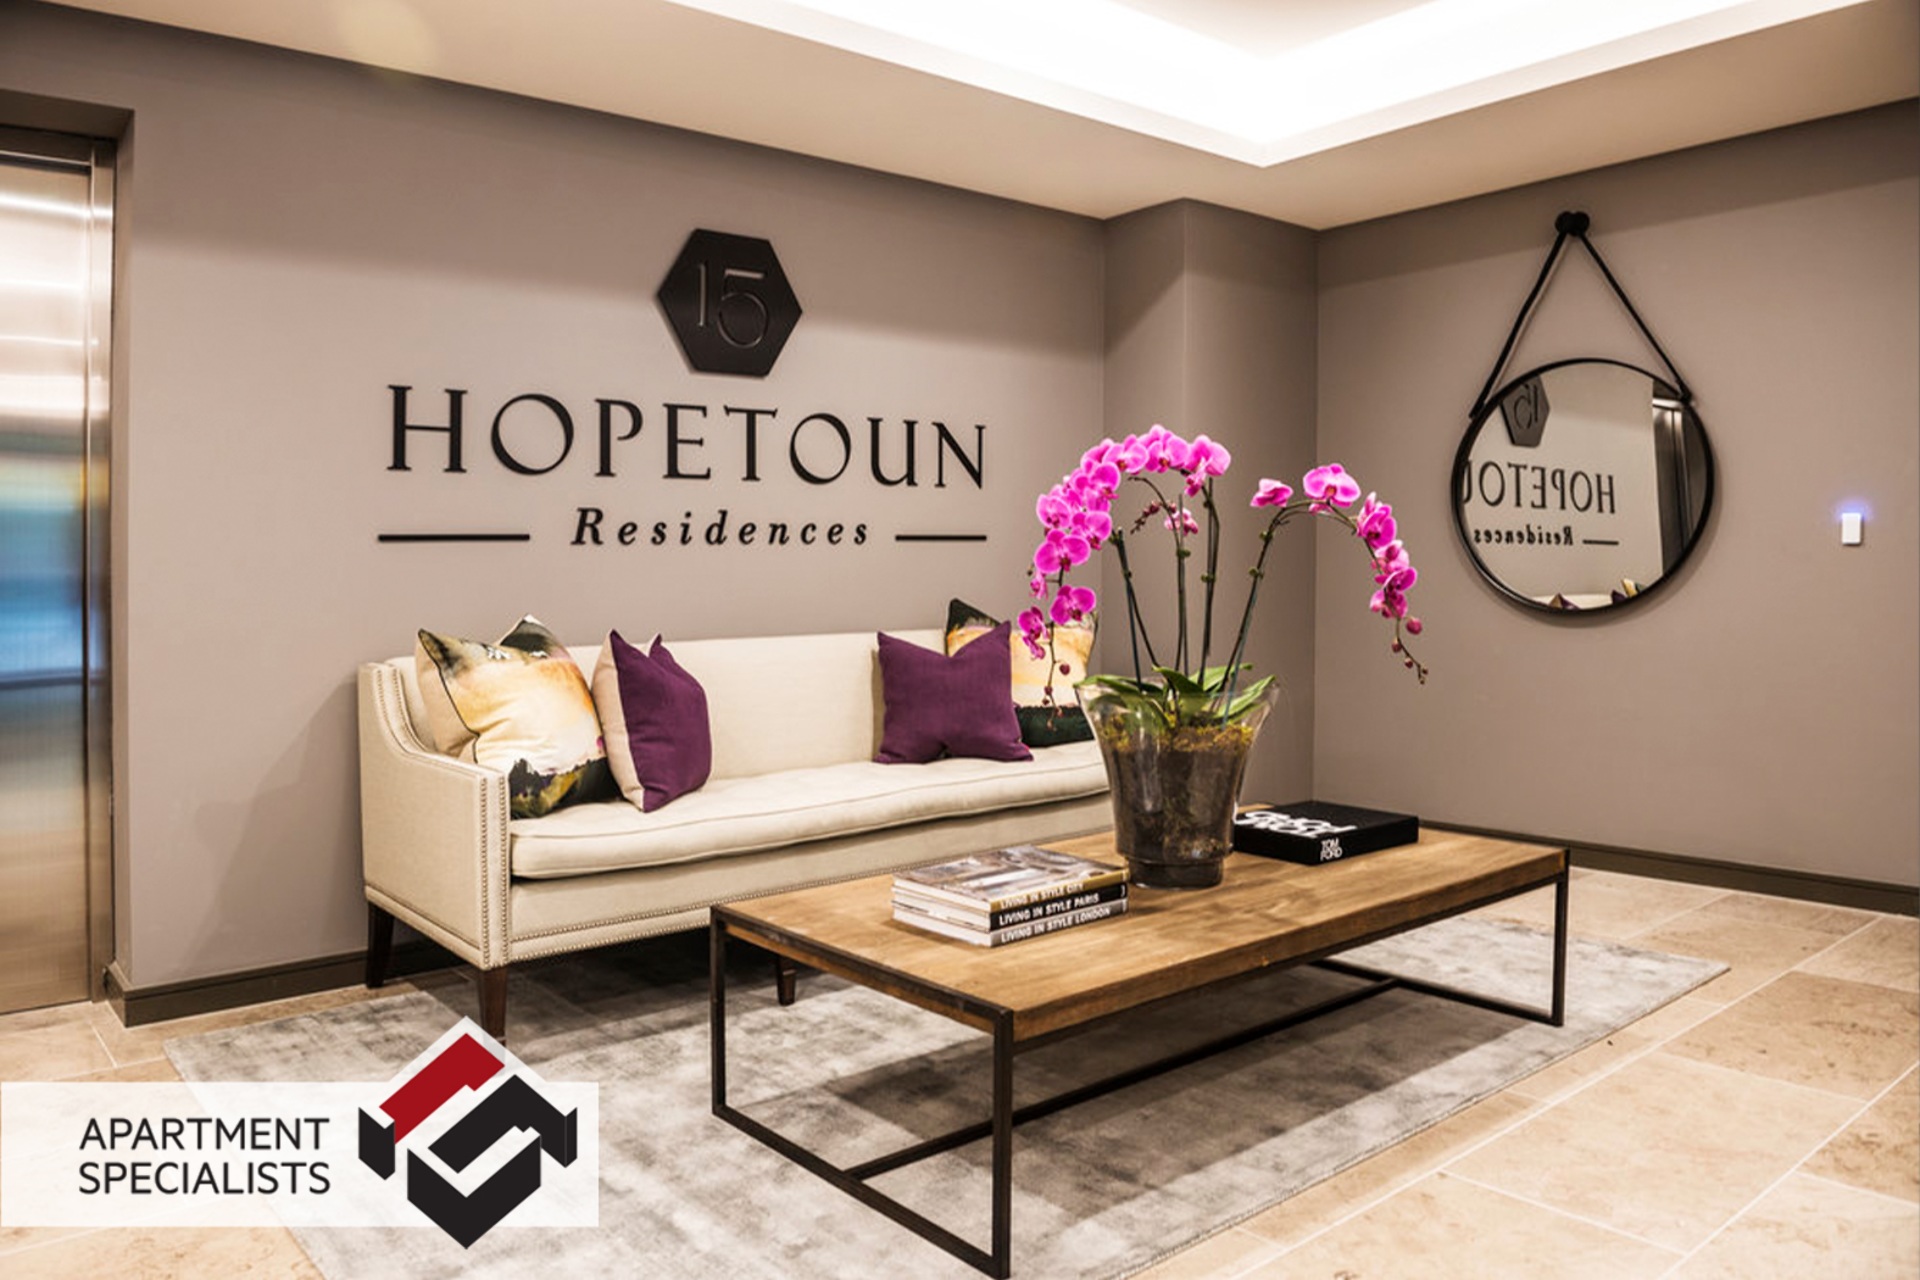 6 | 15 Hopetoun Street, Freemans Bay | Apartment Specialists